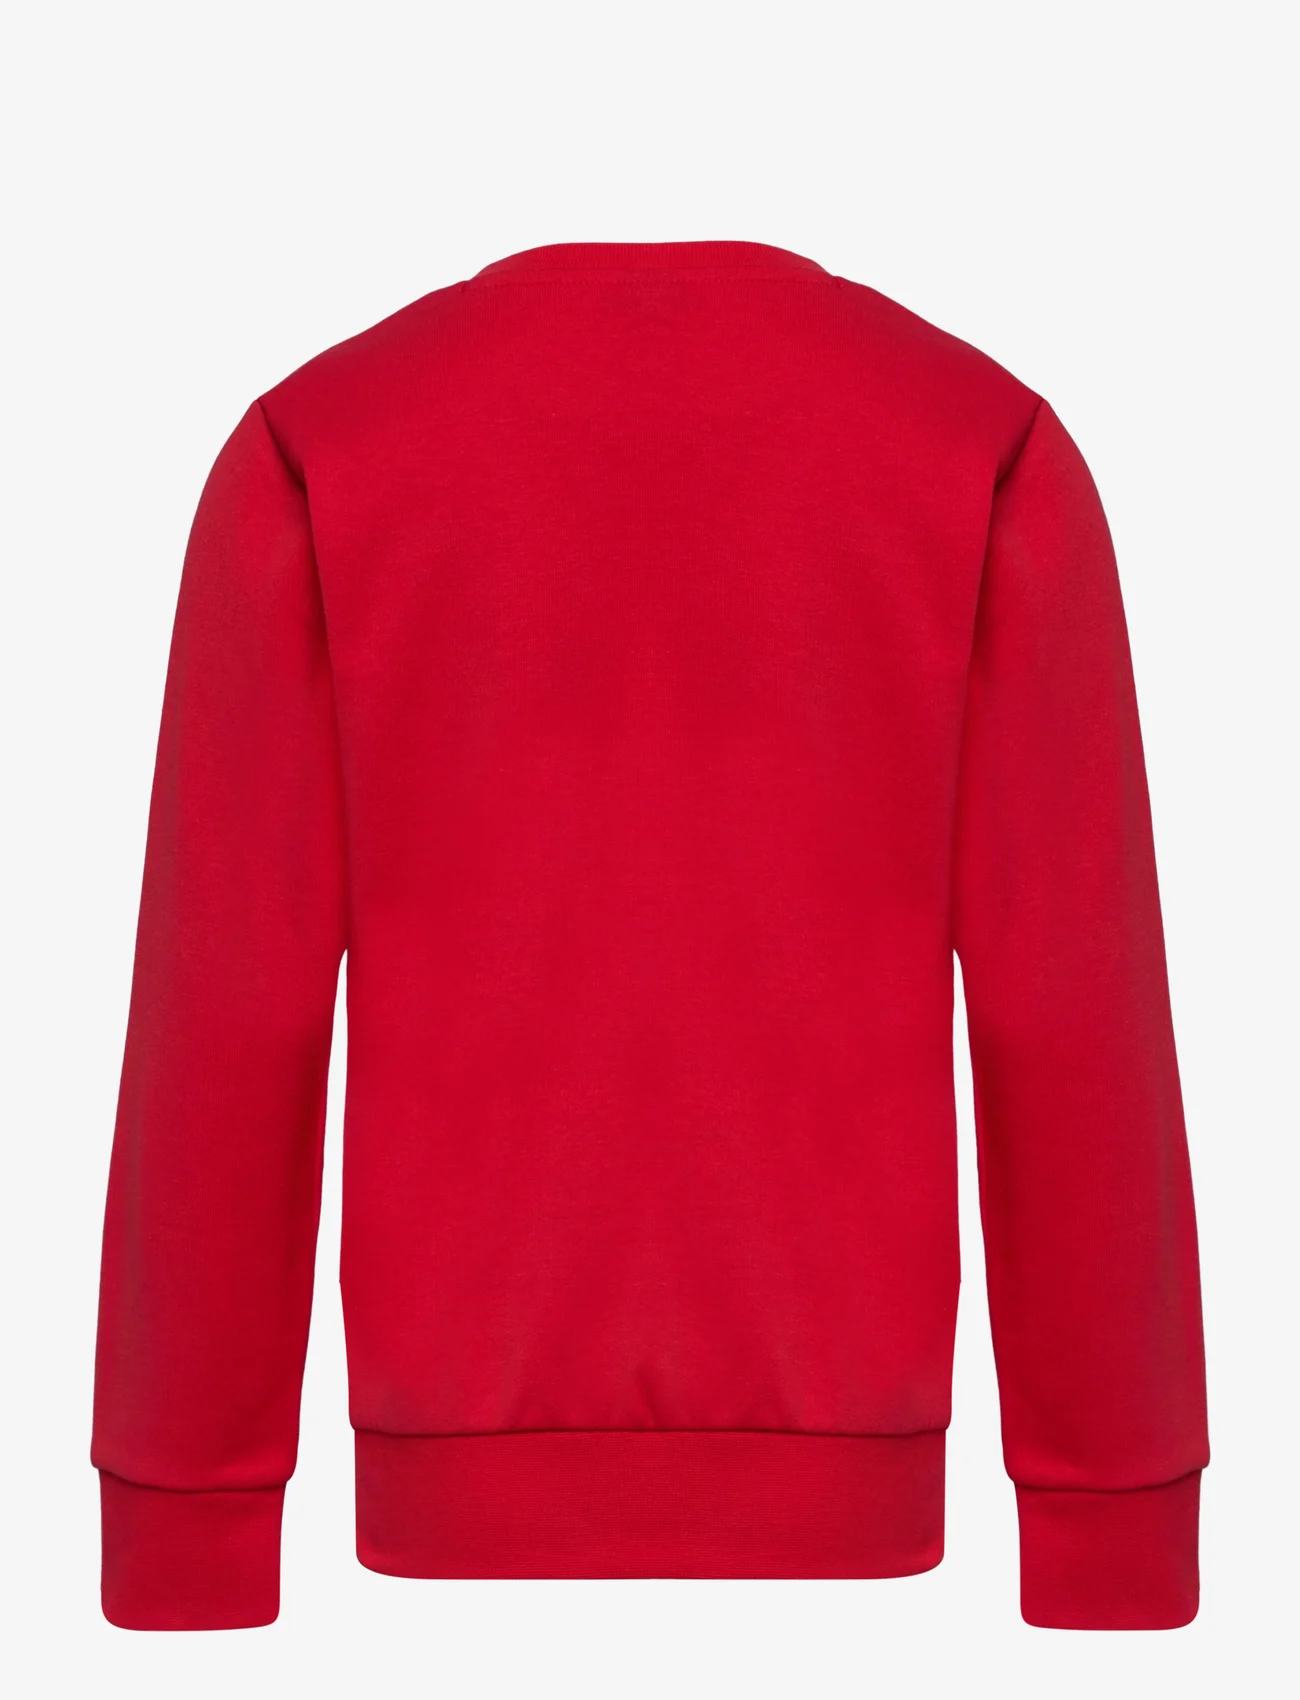 Champion - Crewneck Sweatshirt - swetry - true red - 1